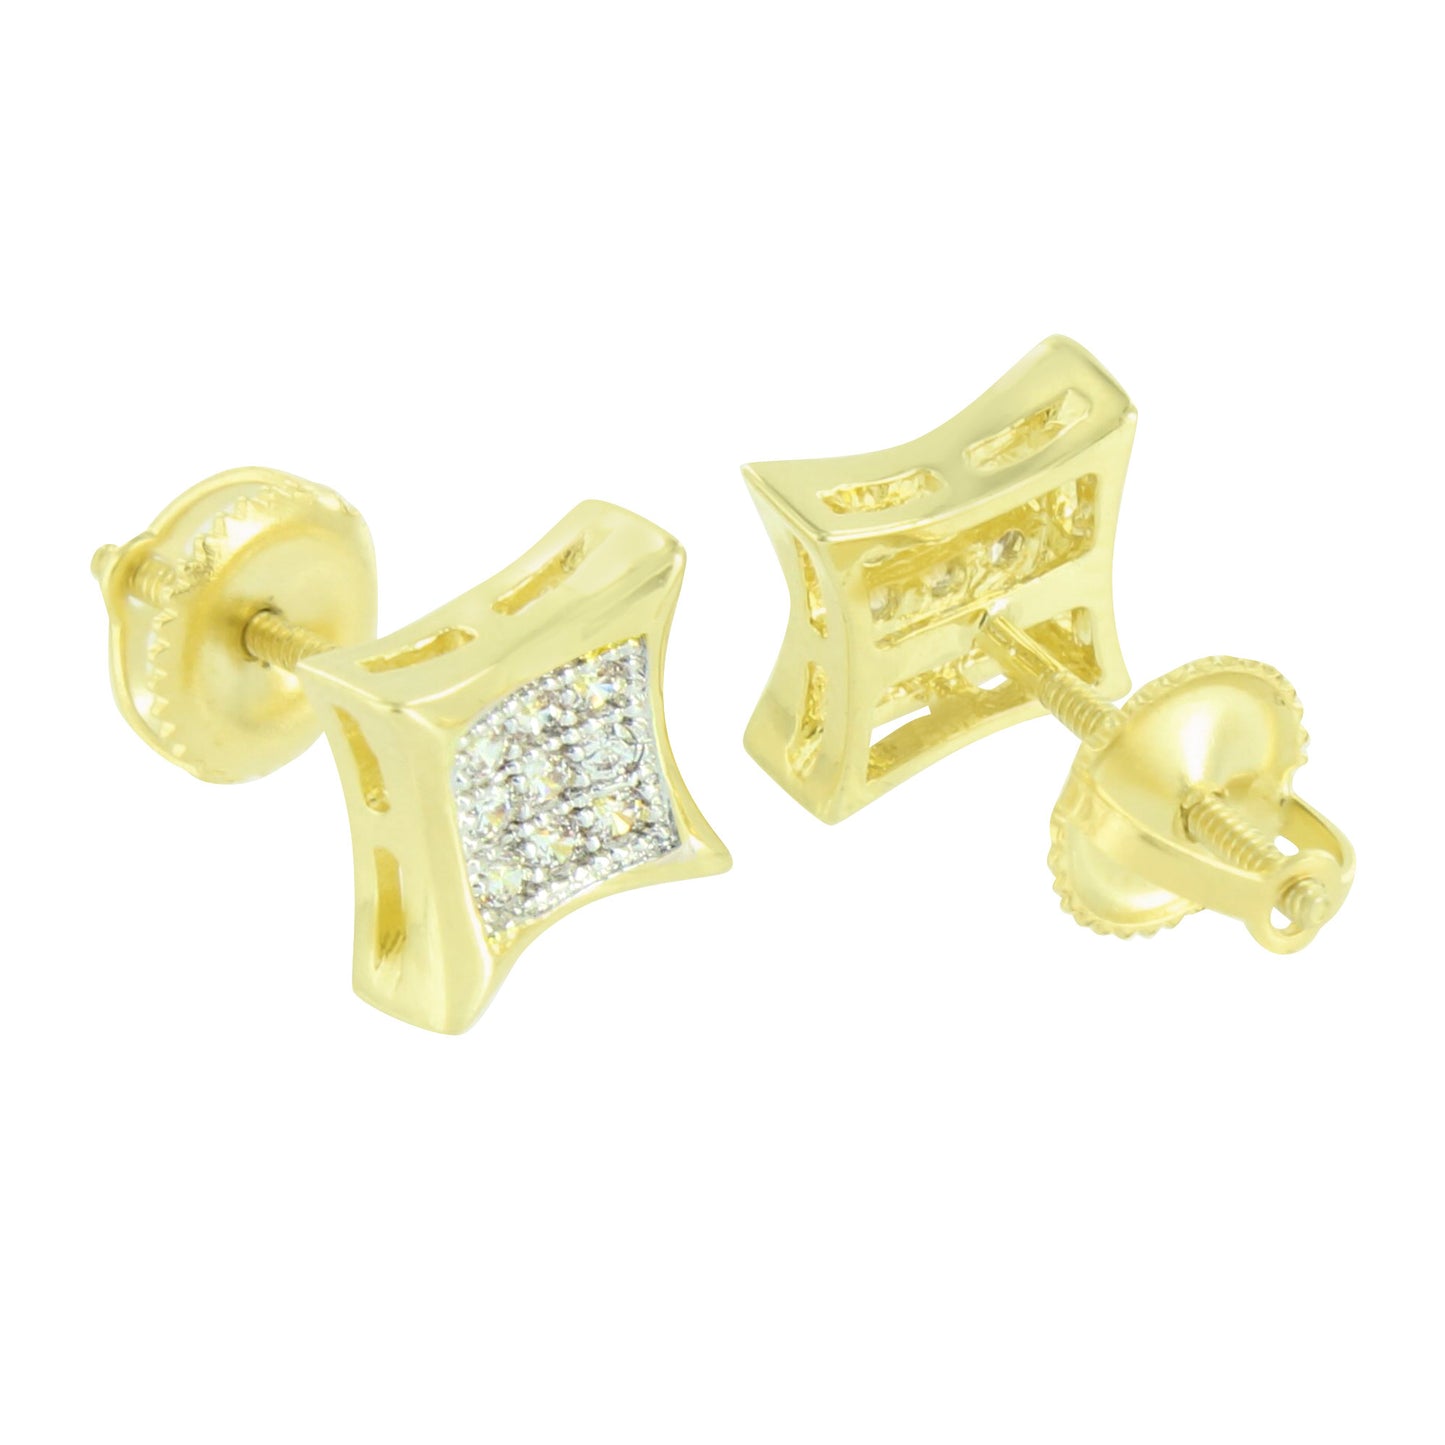 Gold Kite Design Earrings Lab Diamonds 8MM Screw Back Micro Pave 14k Finish New